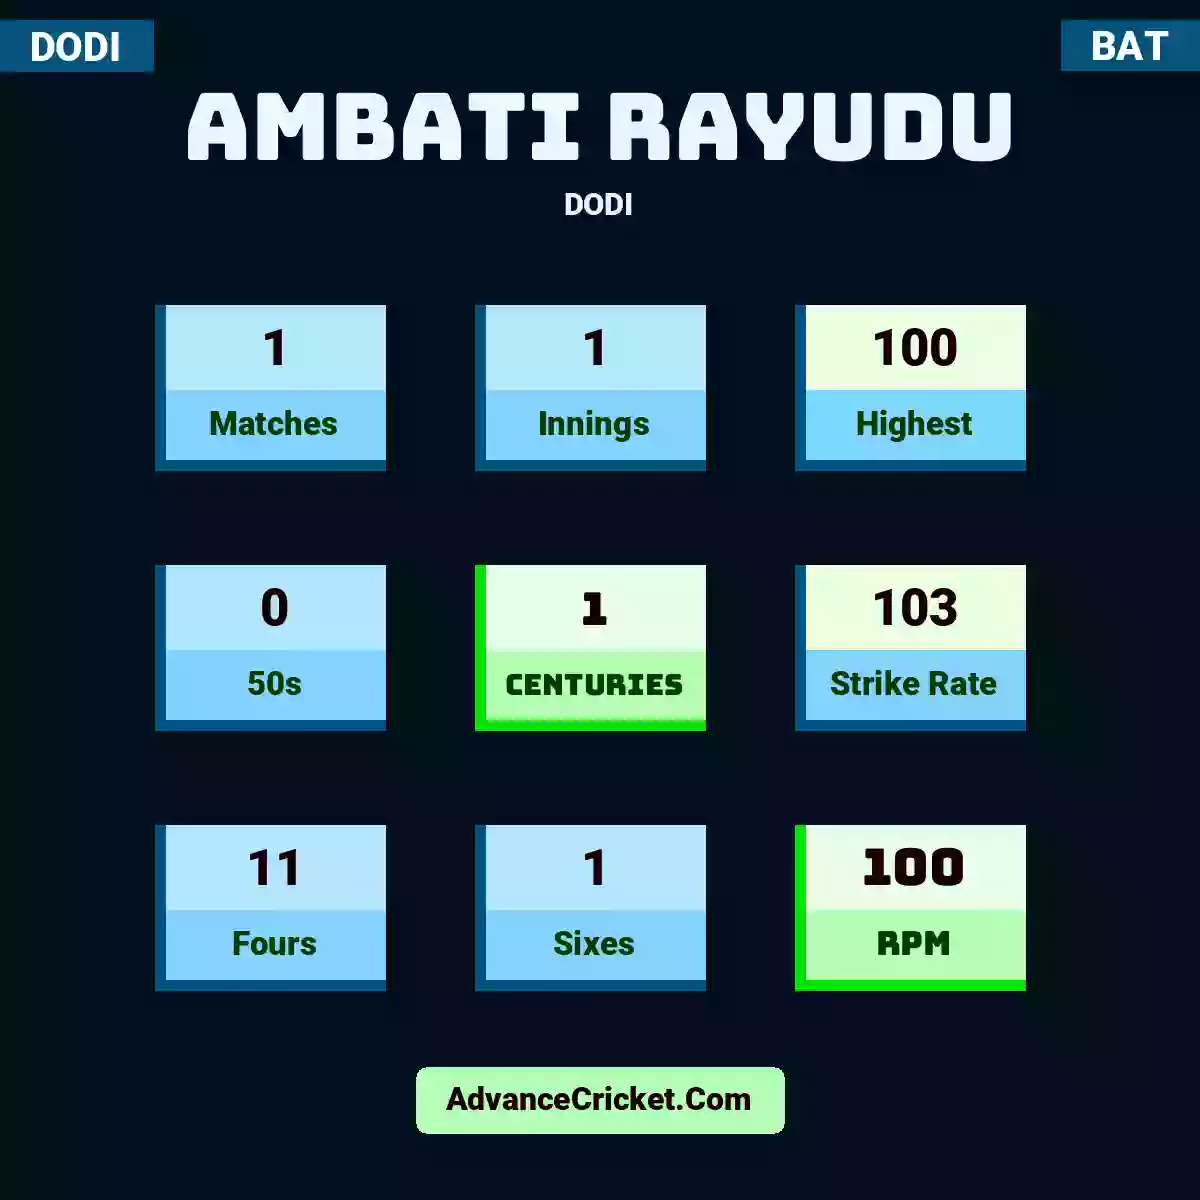 Ambati Rayudu DODI , Ambati Rayudu played 1 matches, scored 100 runs as highest, 0 half-centuries, and 1 centuries, with a strike rate of 103. A.Rayudu hit 11 fours and 1 sixes, with an RPM of 100.